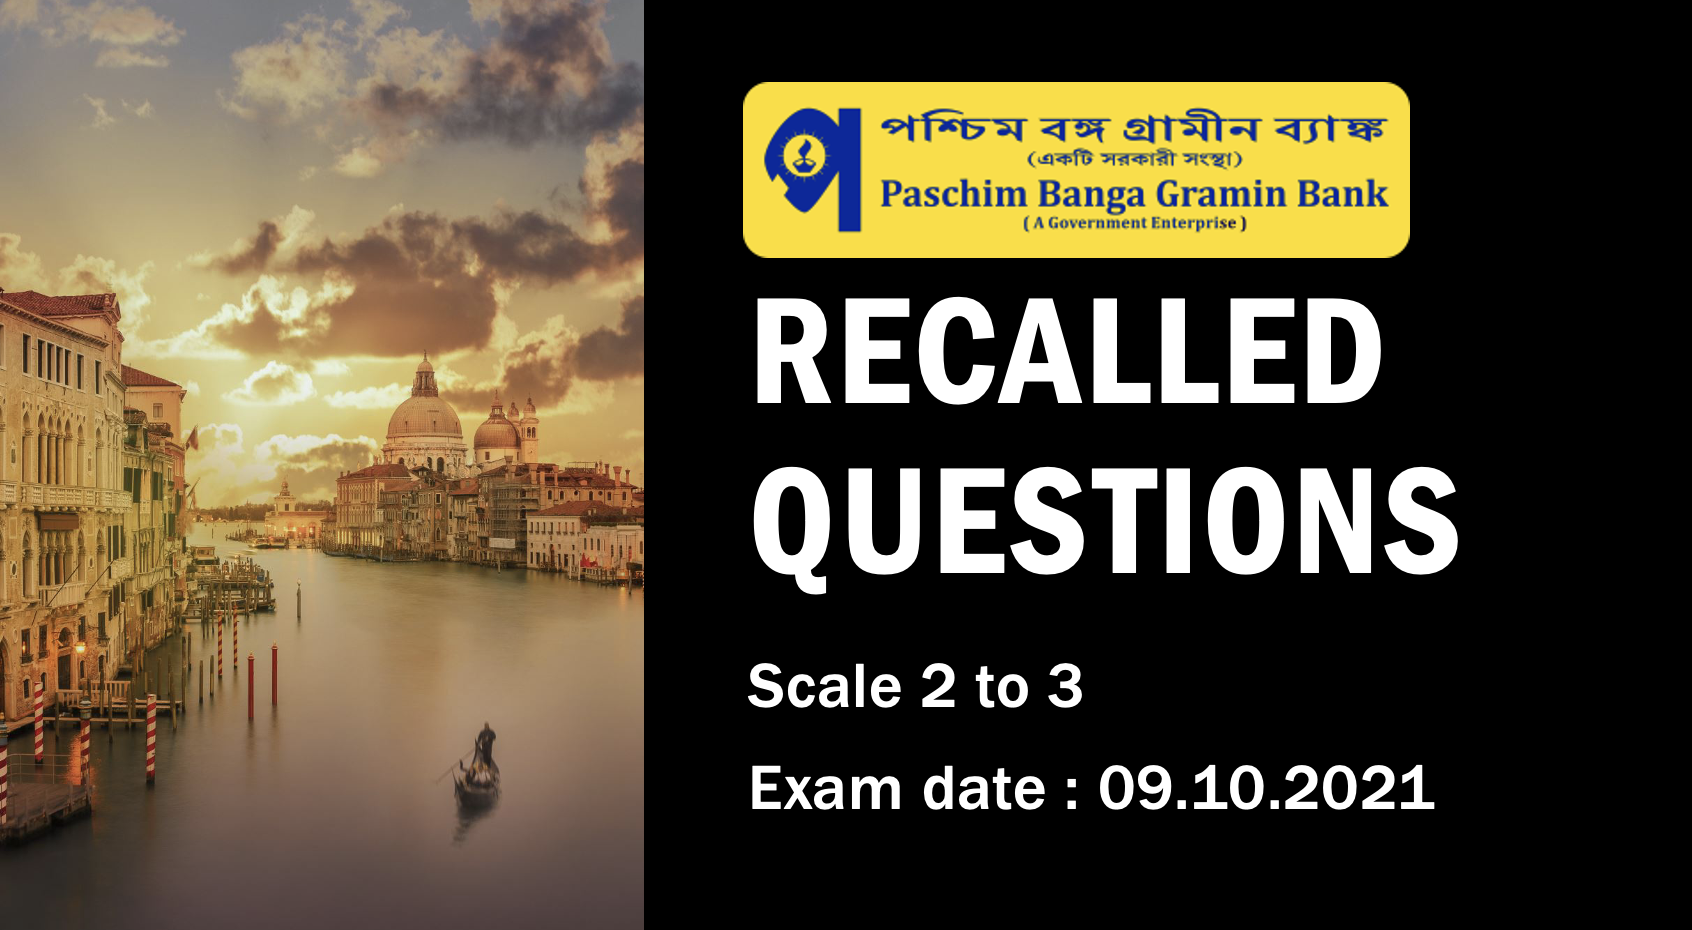  Recalled Questions - Paschim Banga Gramin Bank Exam dtd. 09.10.2021-Scale 2 to 3